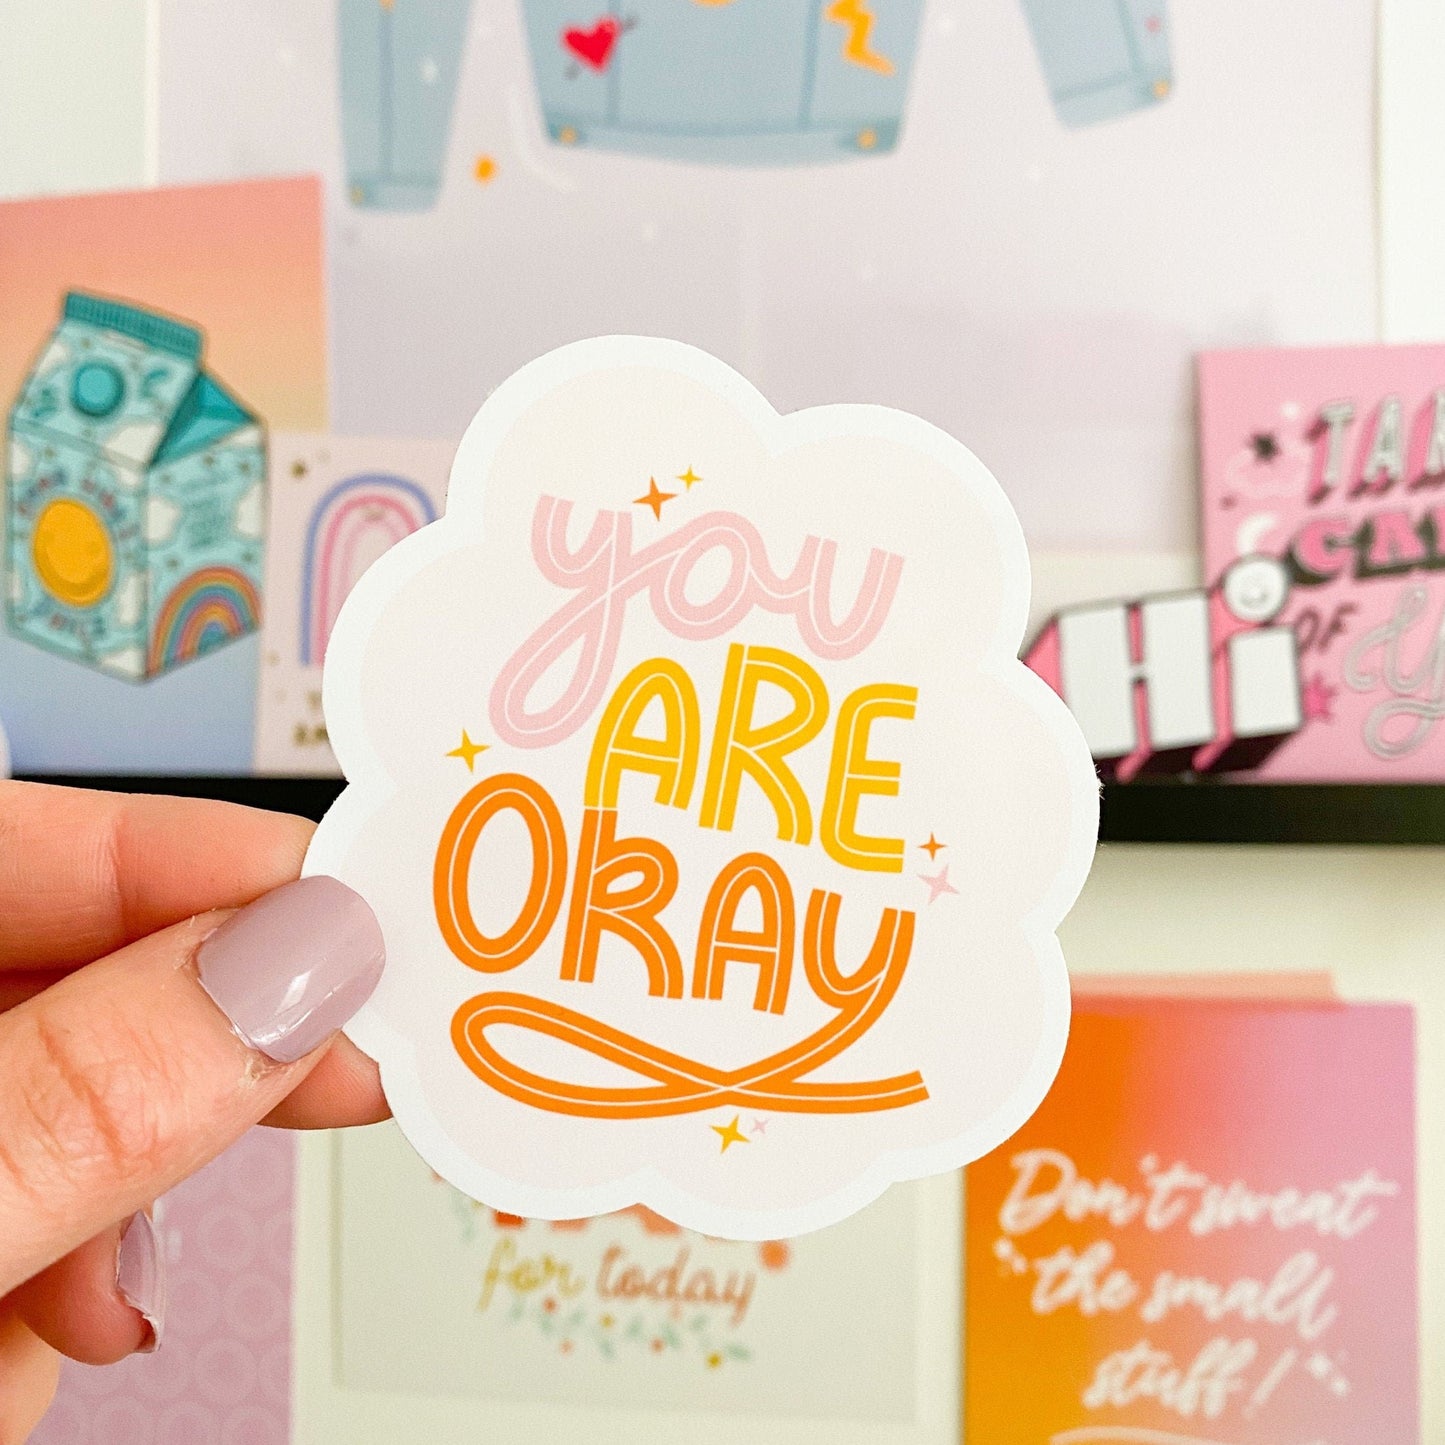 You are okay Sticker